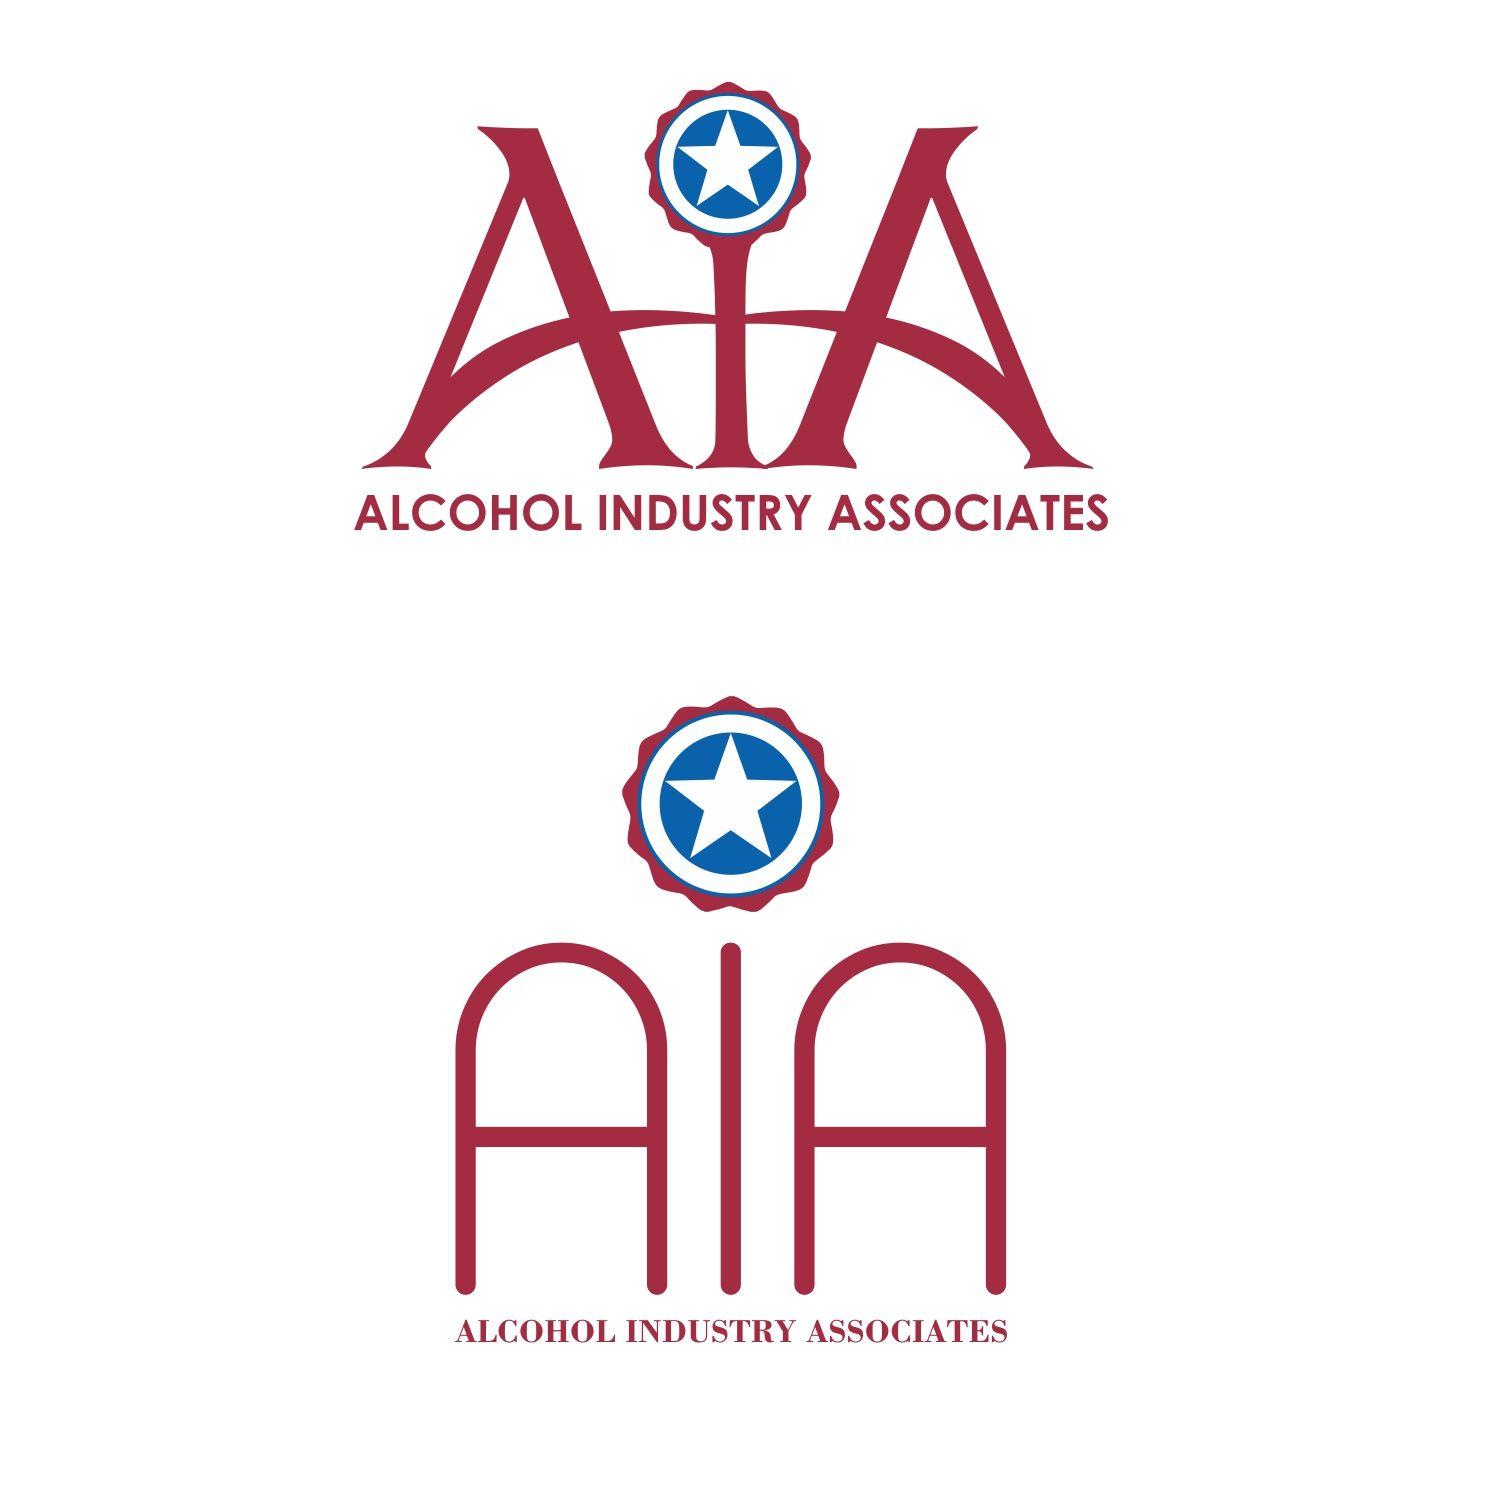 Alcohol Company Logo - Modern, Professional, Business Logo Design for our company name